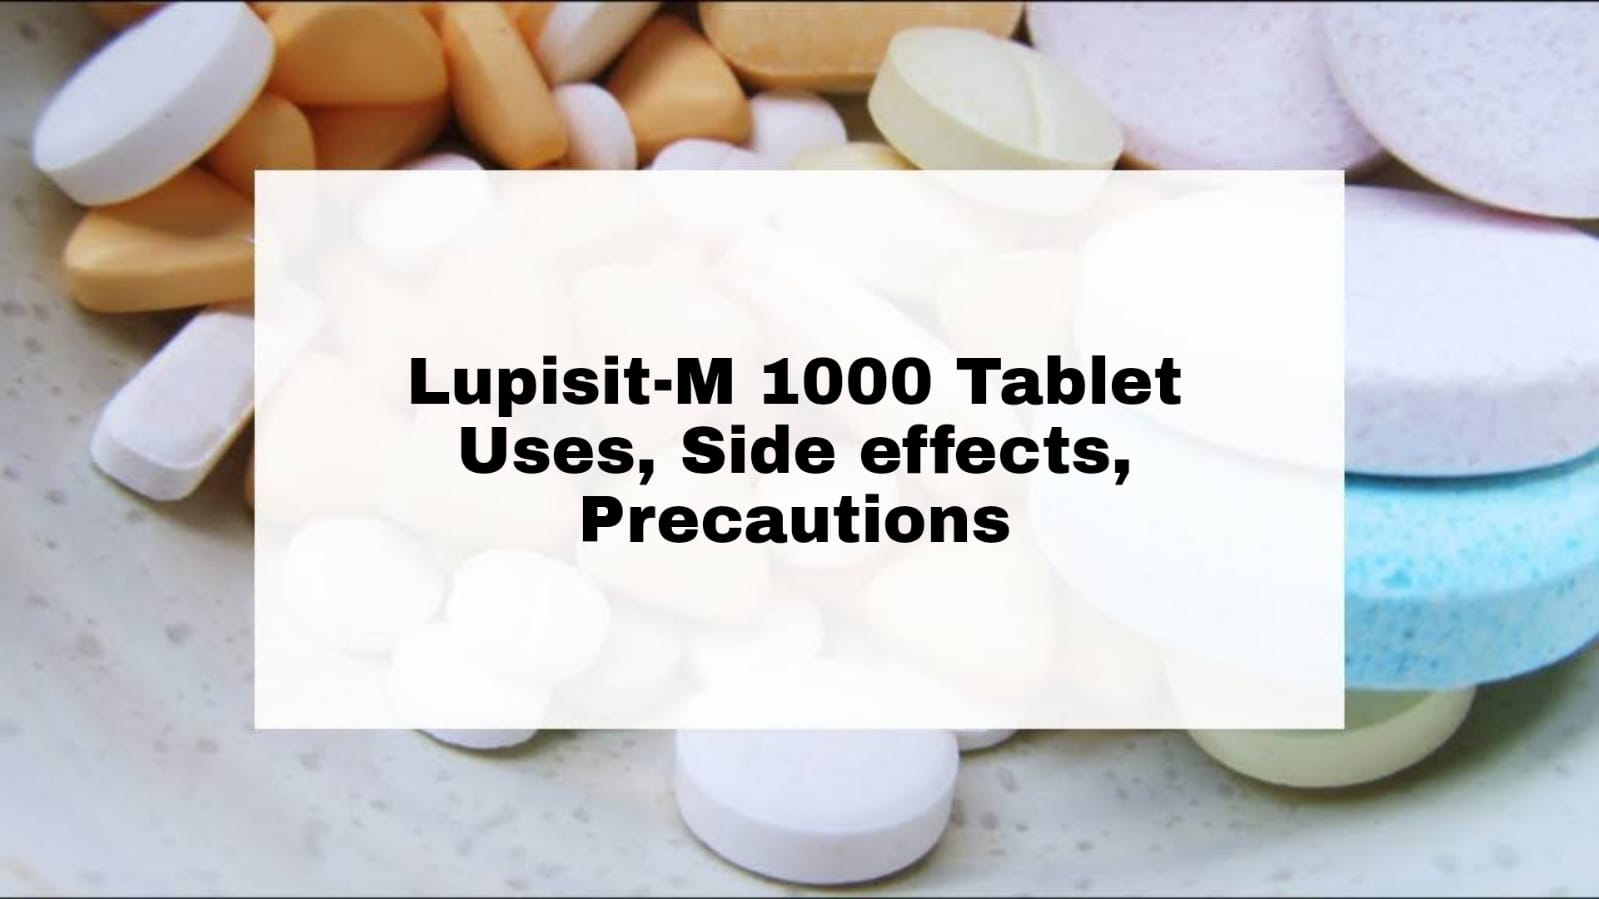 Lupisit-M 1000 Tablet